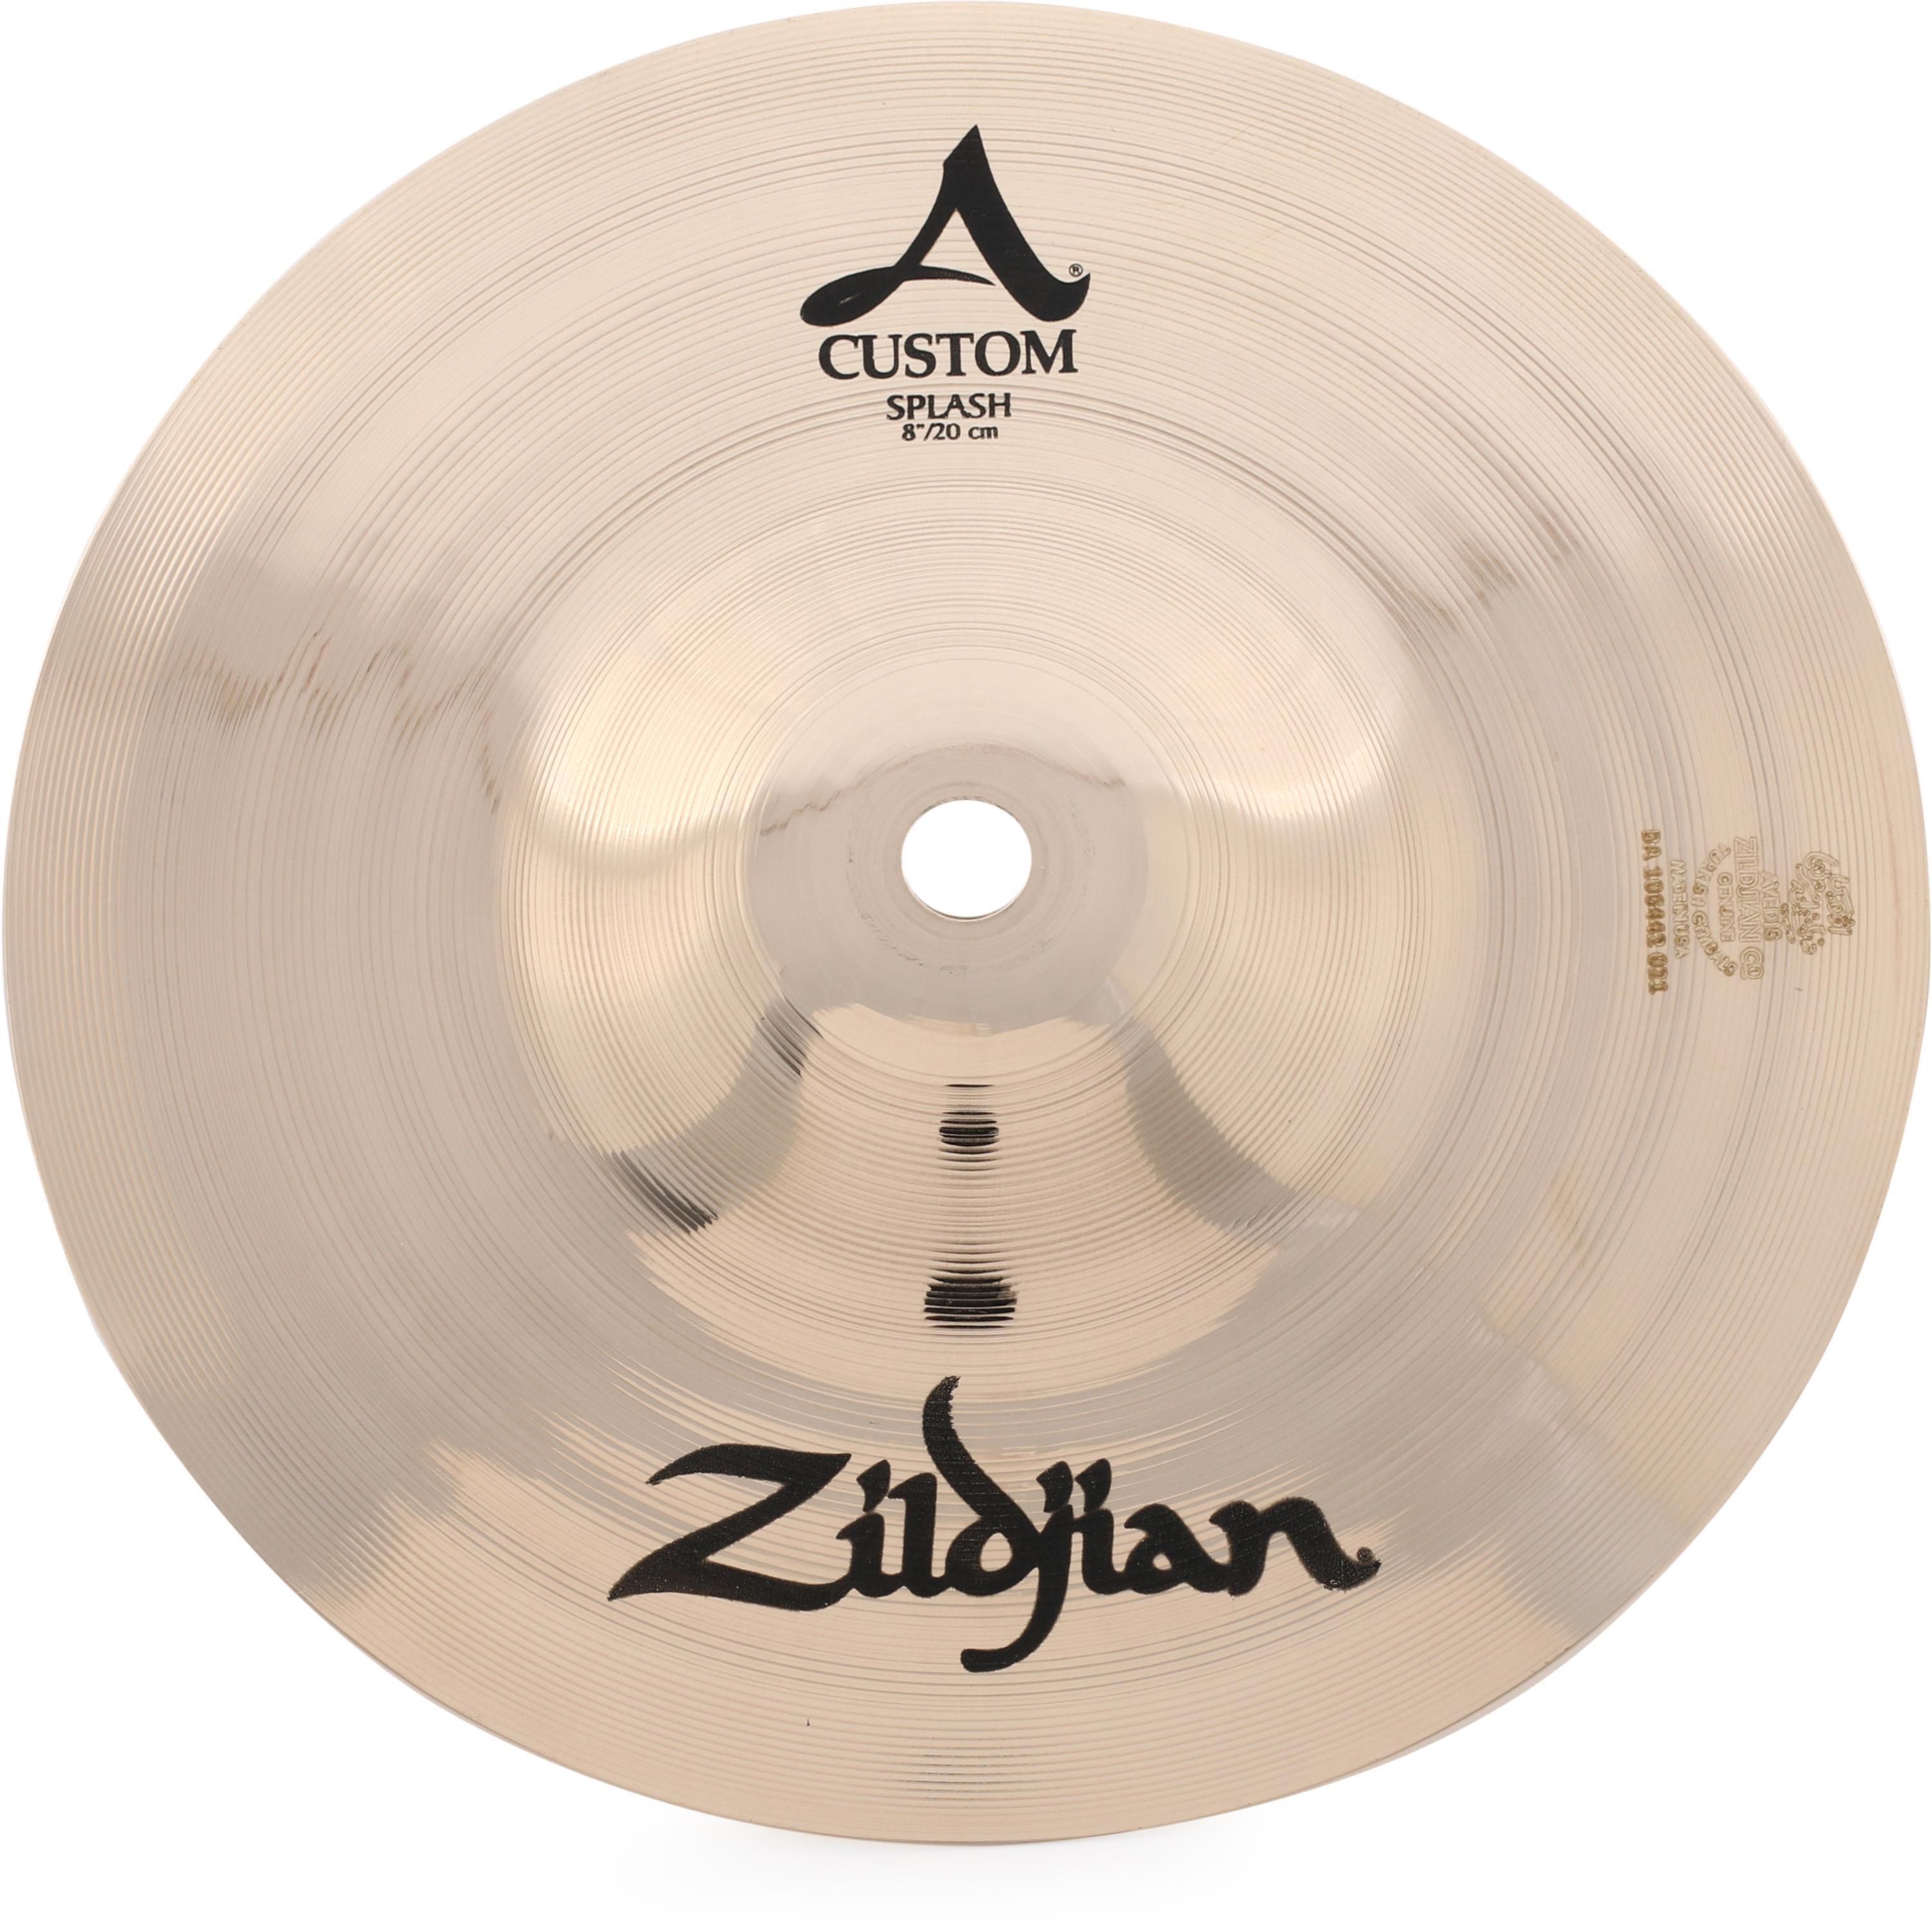 Zildjian 8 inch A Custom Splash Cymbal | Sweetwater